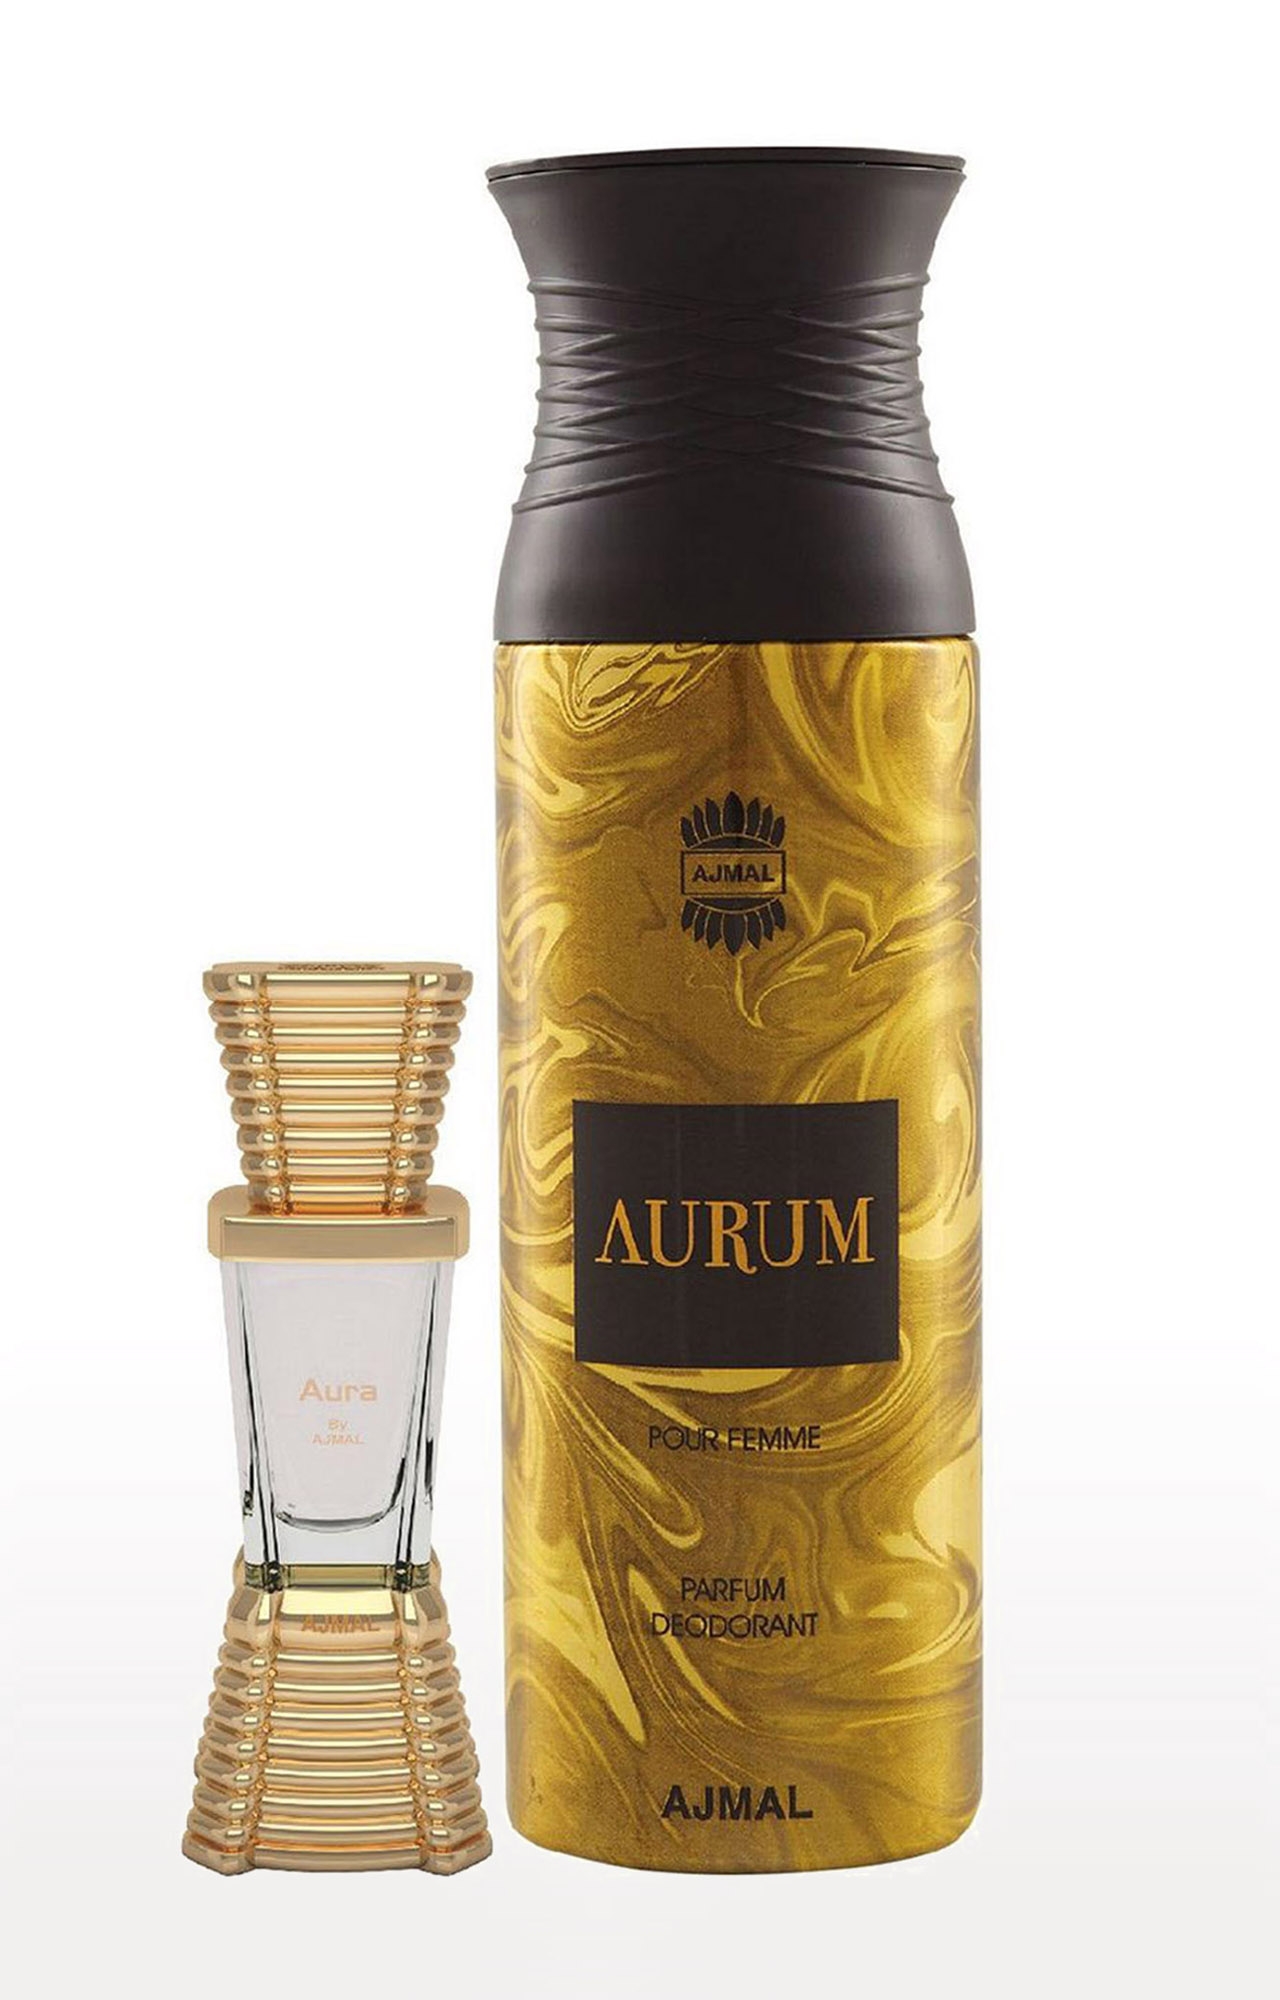 Ajmal | Ajmal Aura Concentrated Perfume Oil Fruity Alcohol-free Attar 10ml for Unisex and Aurum Femme Deodorant Fruity Fragrance 200ml for Women 0